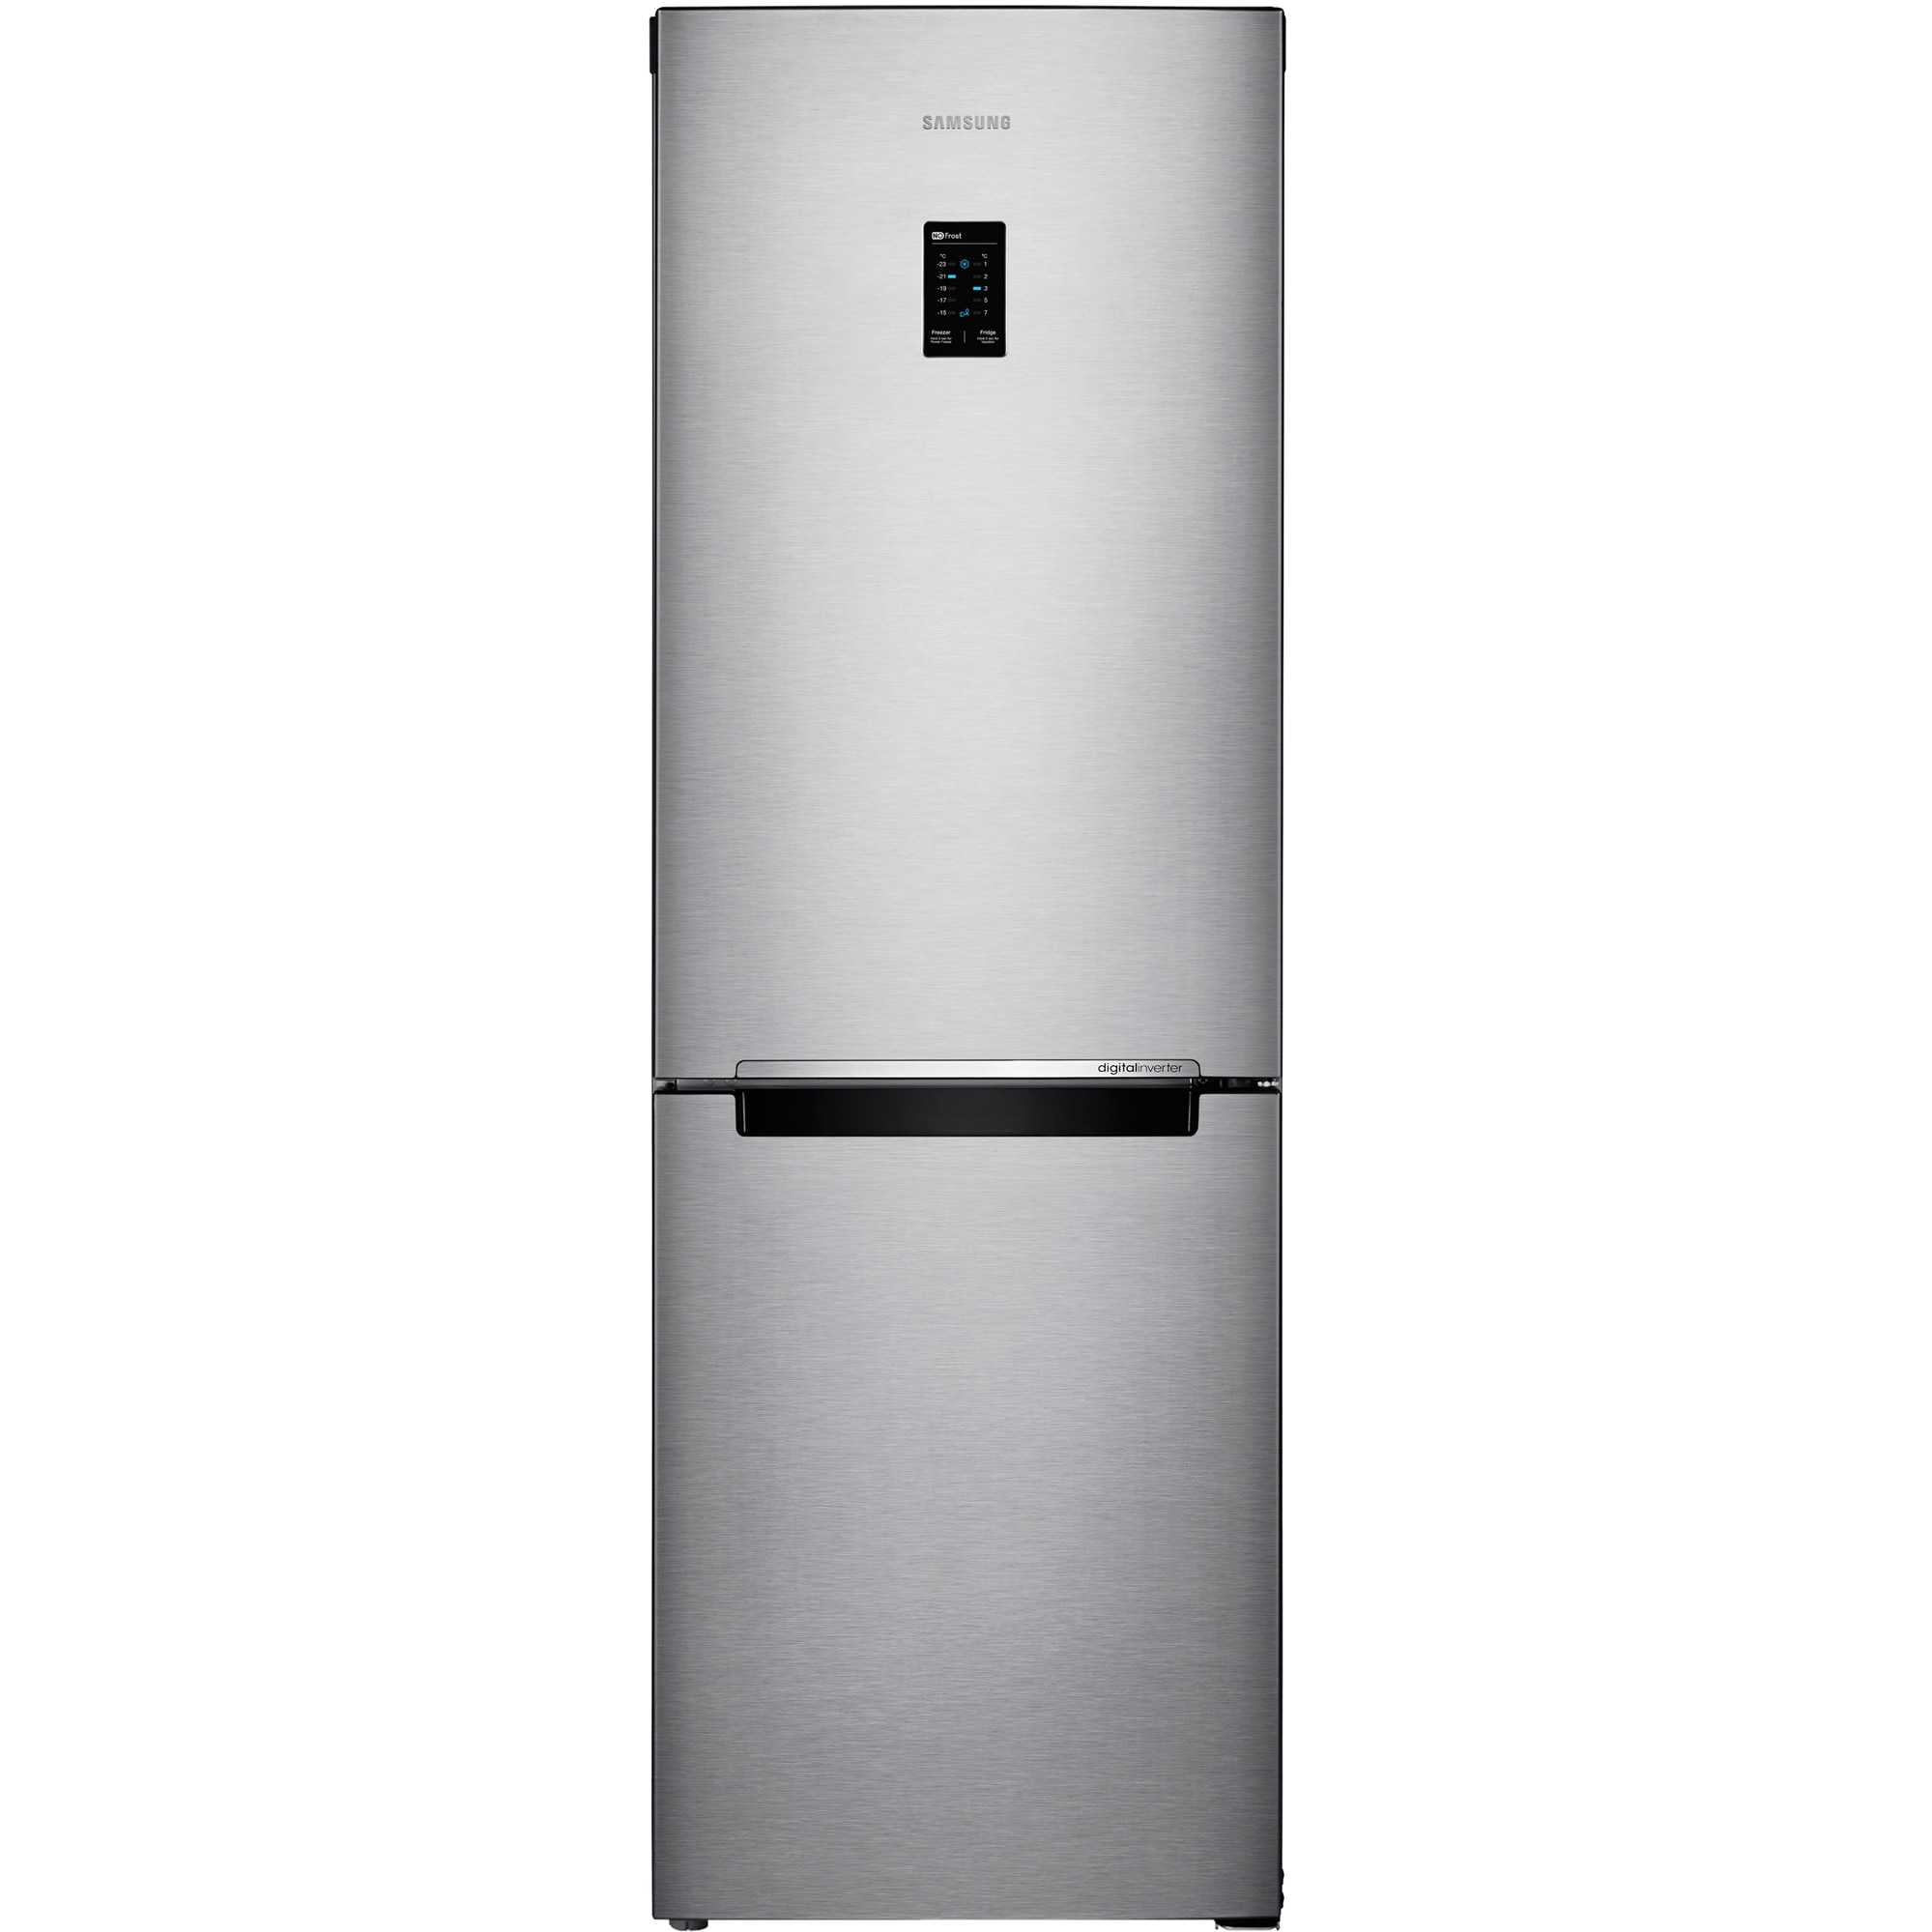 Хладилник Samsung RB29FERNDSA с обем от 290 л.